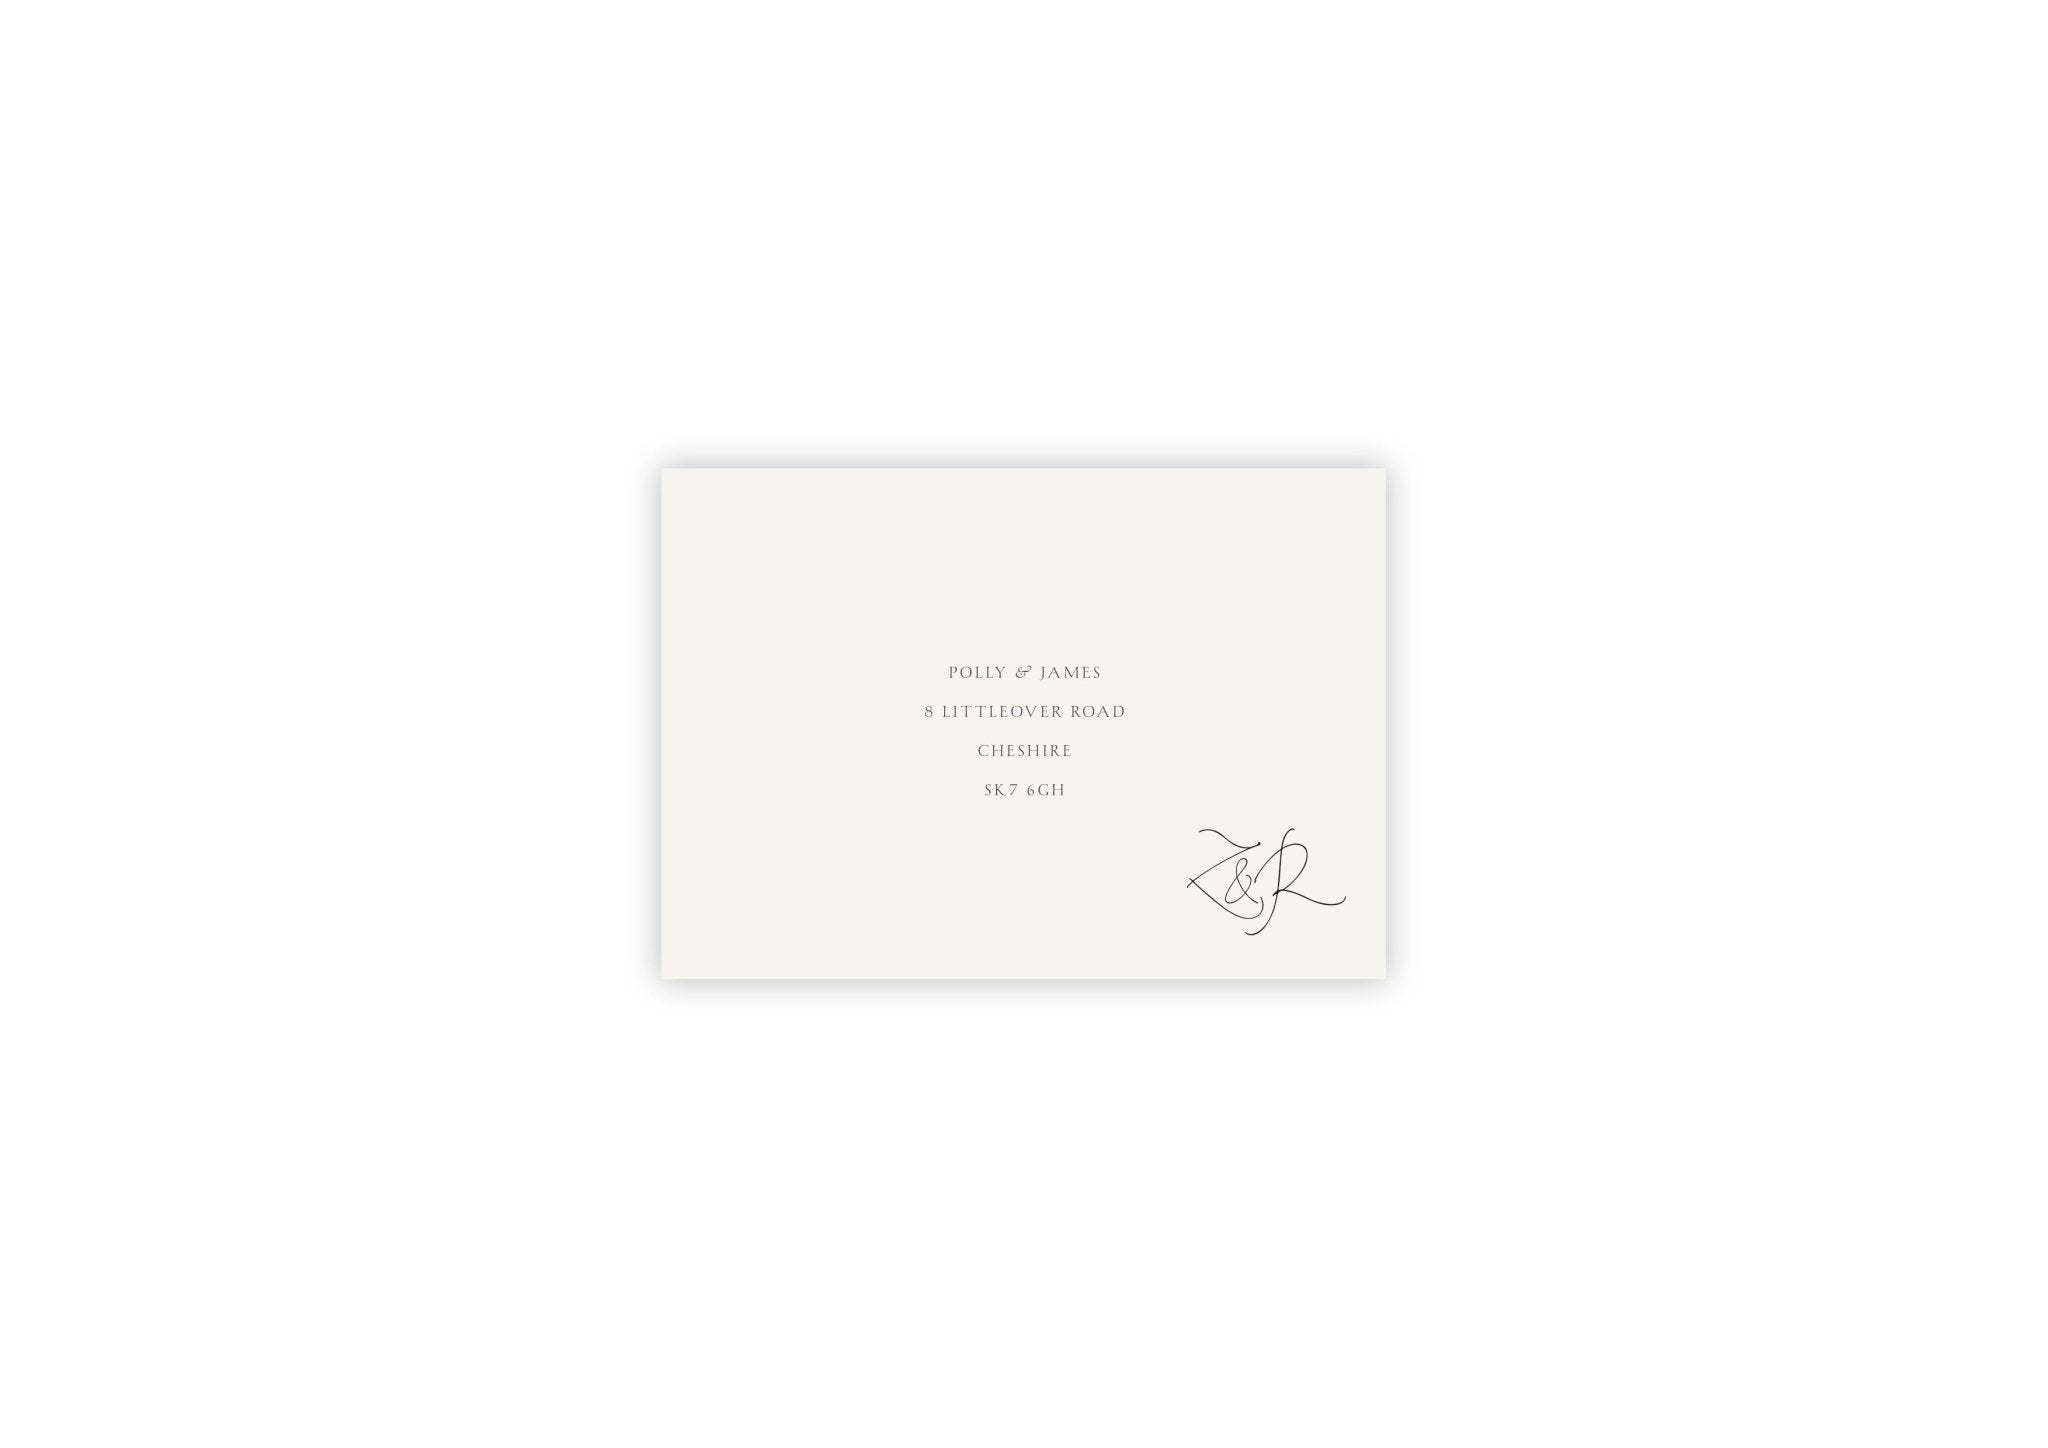 Just Like Heaven - Personalised RSVP Envelope - Ten Story Stationery